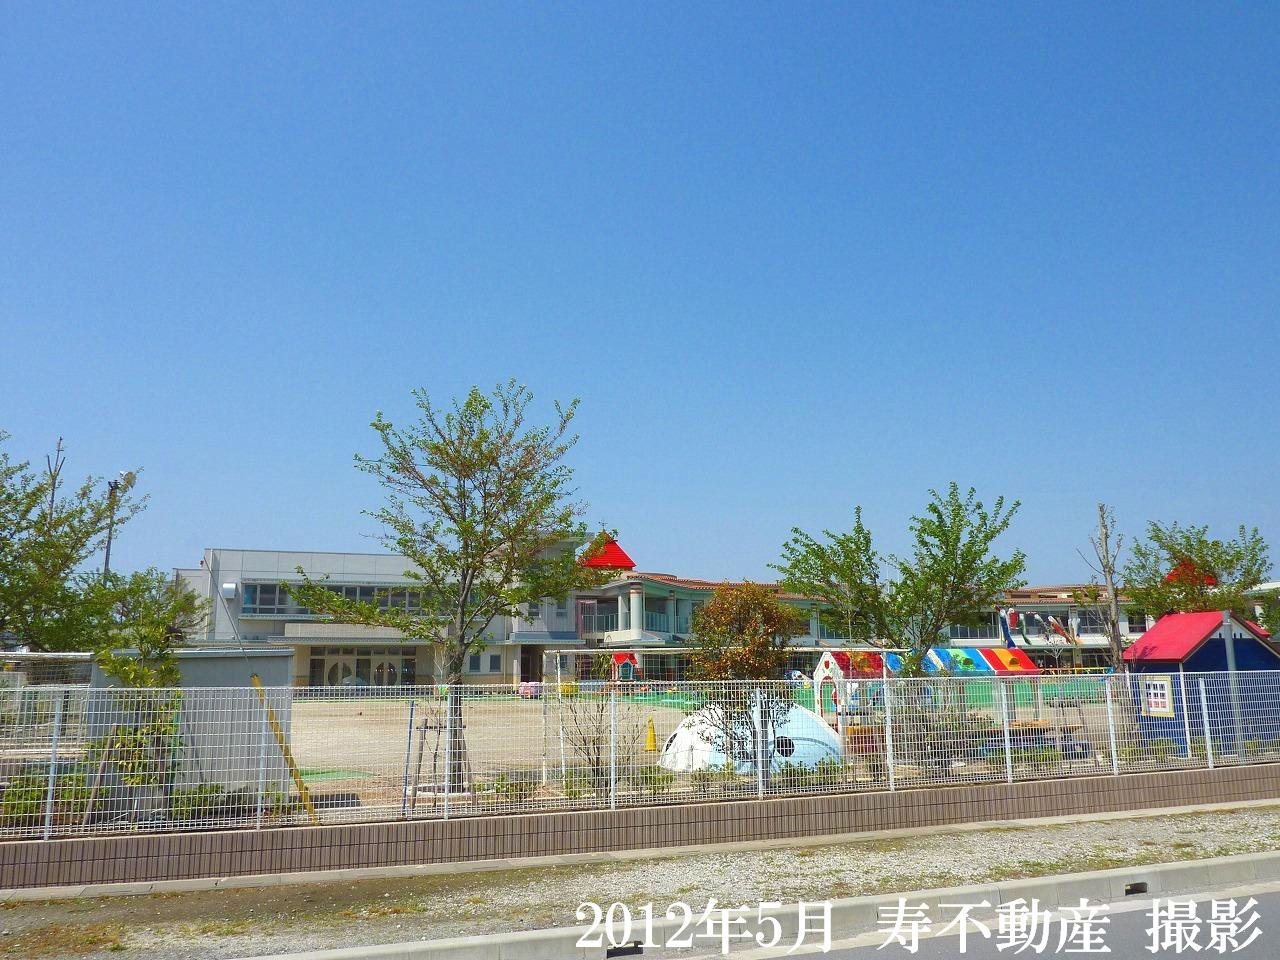 kindergarten ・ Nursery. School corporation platinum Gakuen platinum kindergarten (kindergarten ・ 672m to the nursery)